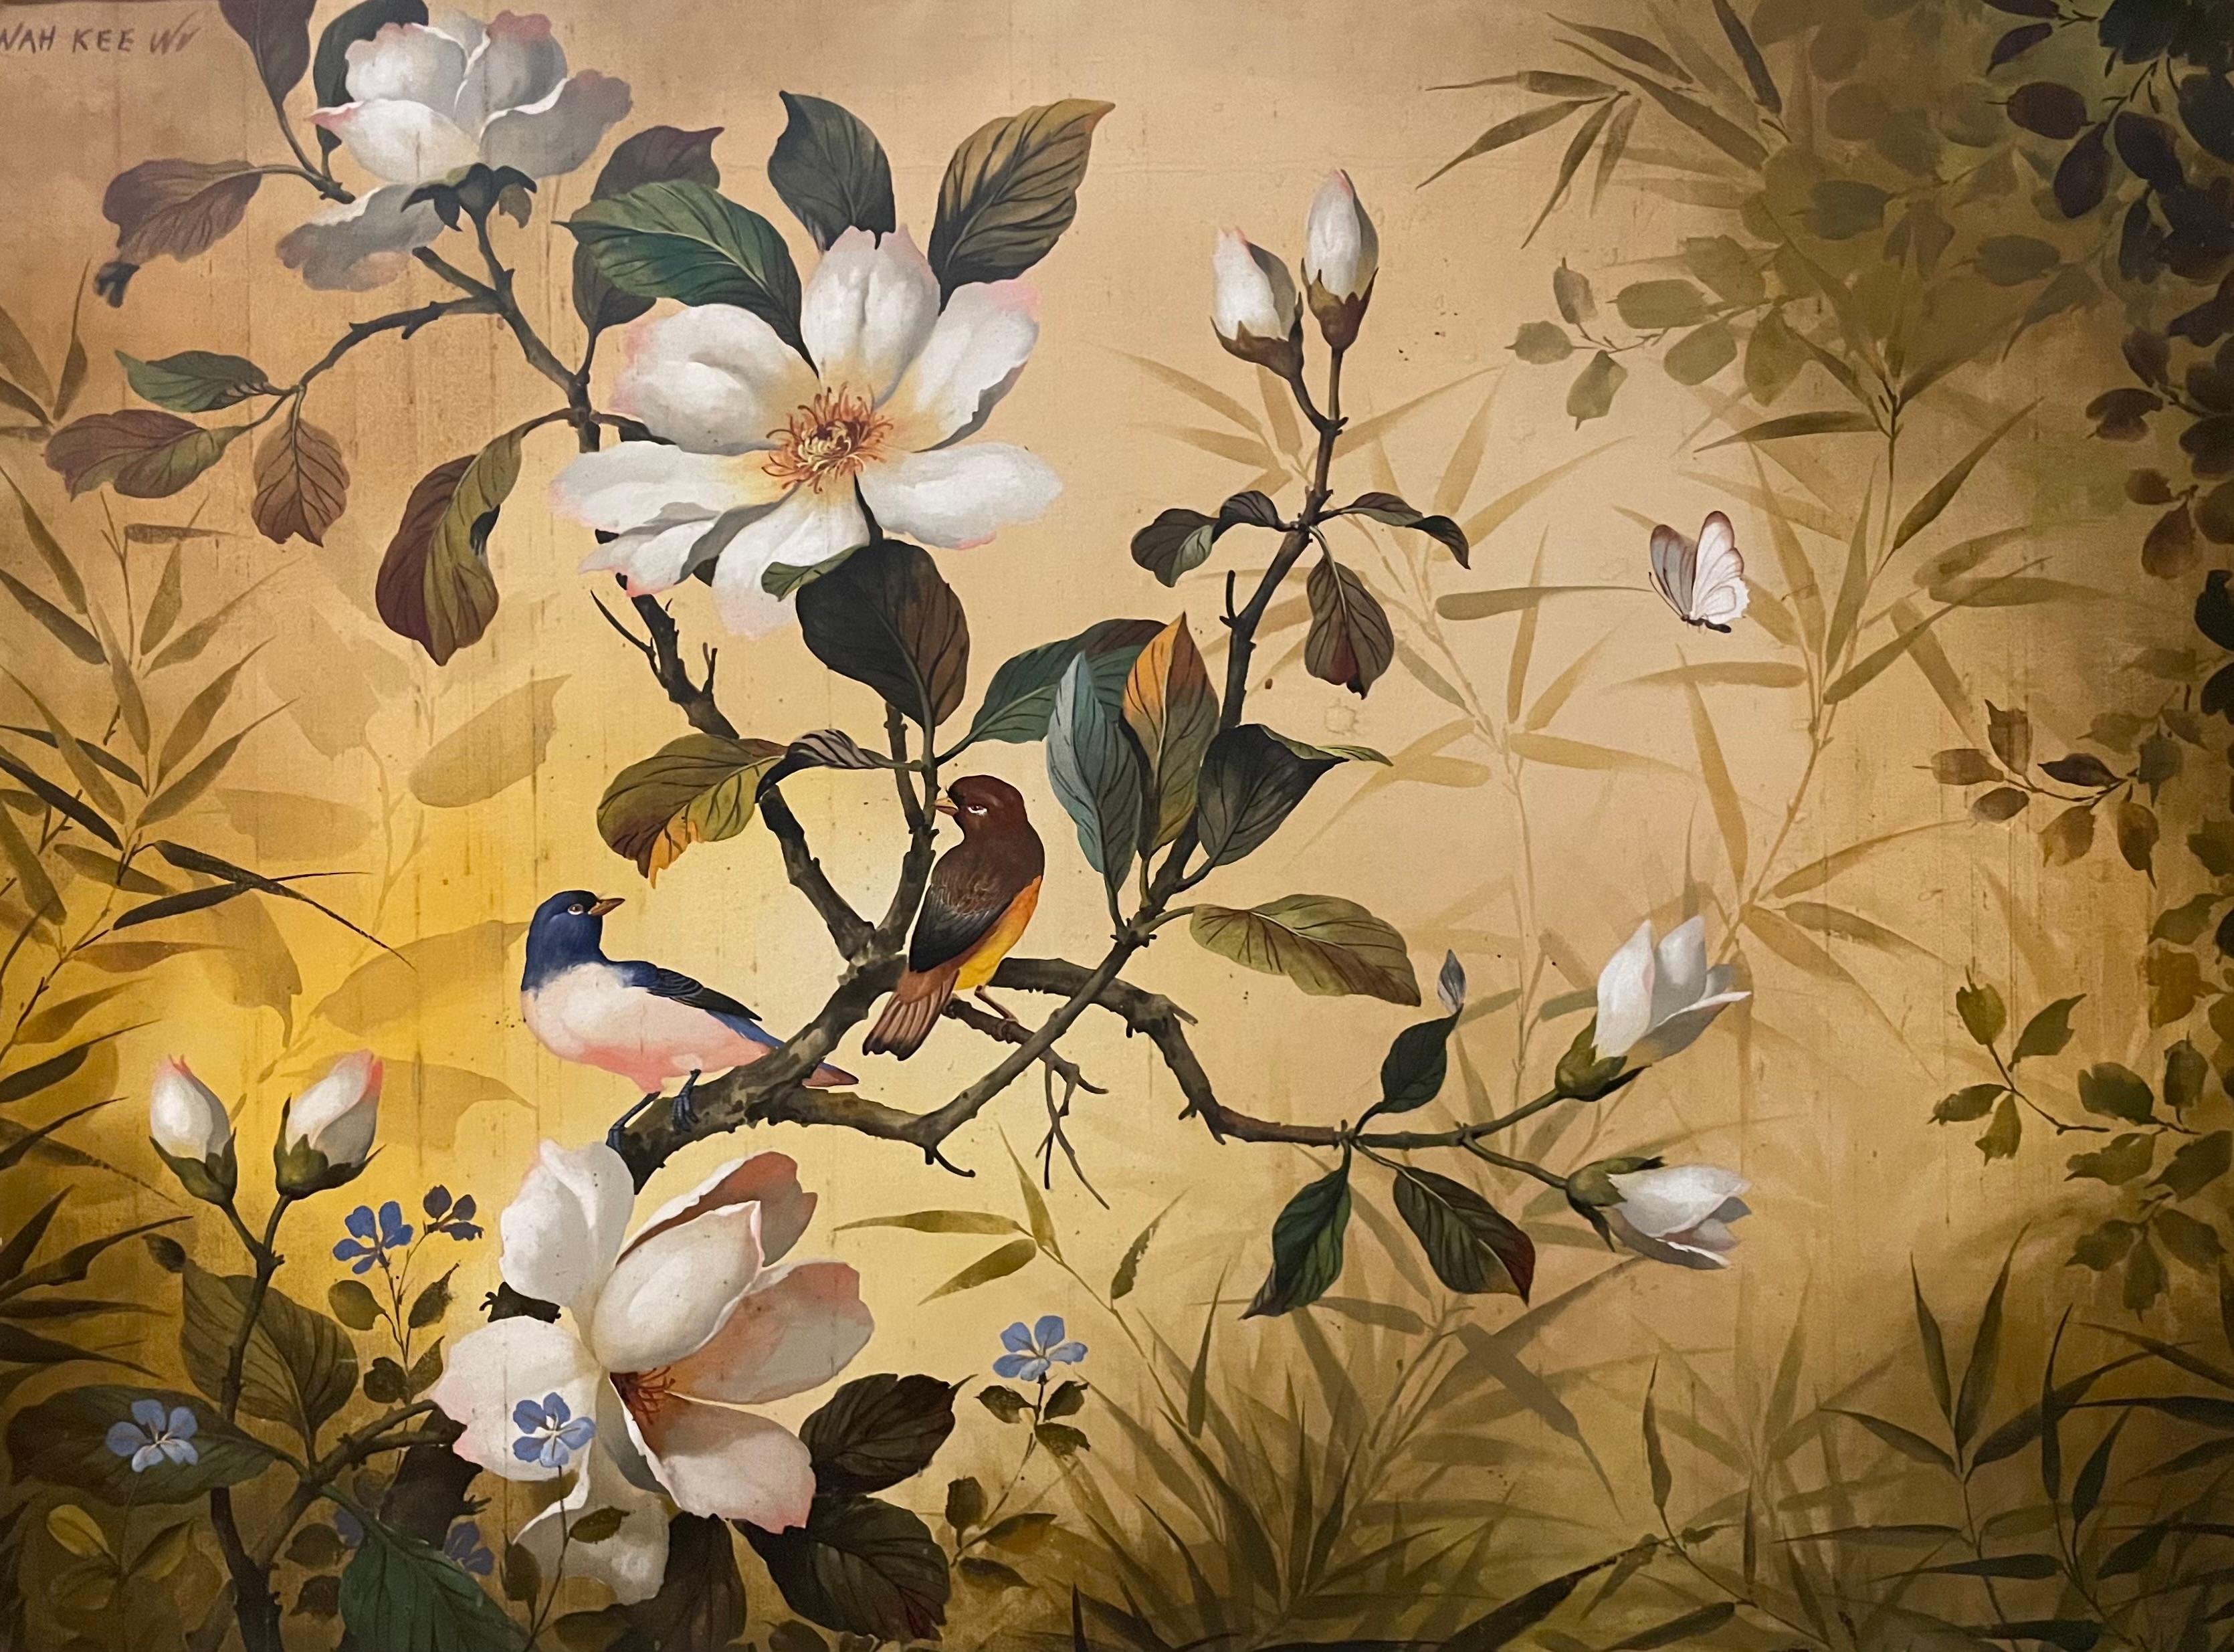 Landscape Painting Kee Wu Wah - Birdbirds among Blossoms